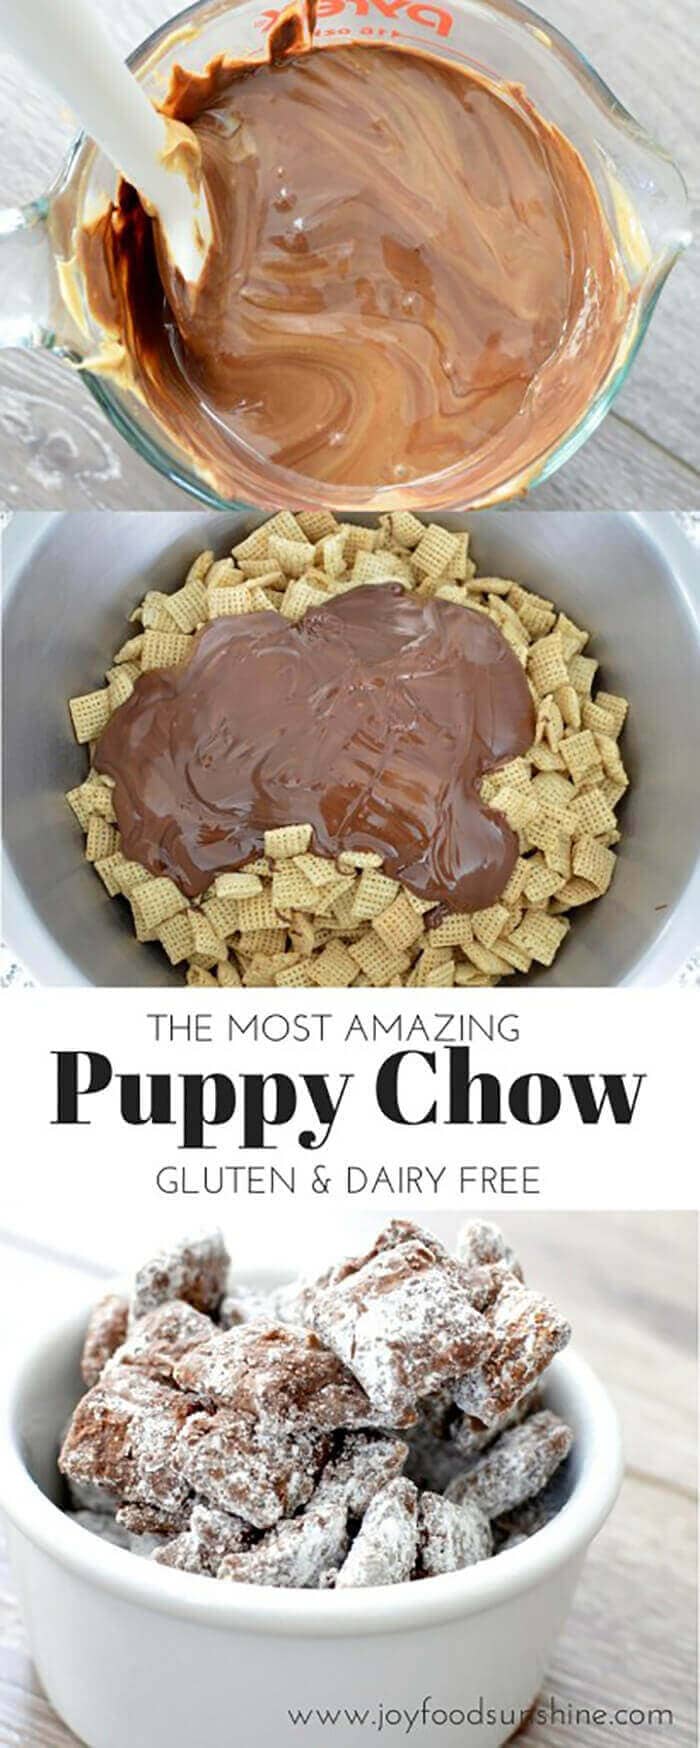 Puppy Chow Recipe